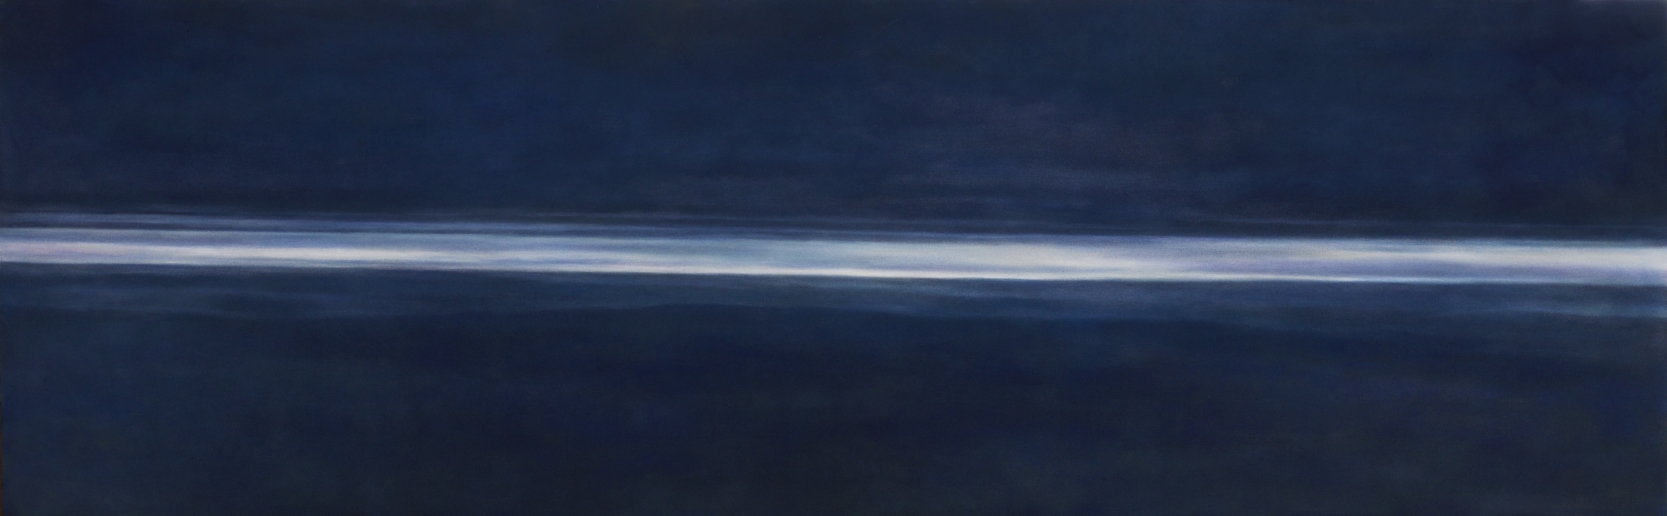 Angela Lyn, blue earth, 2019 (sold)
Oil on canvas
68 x 220 cm